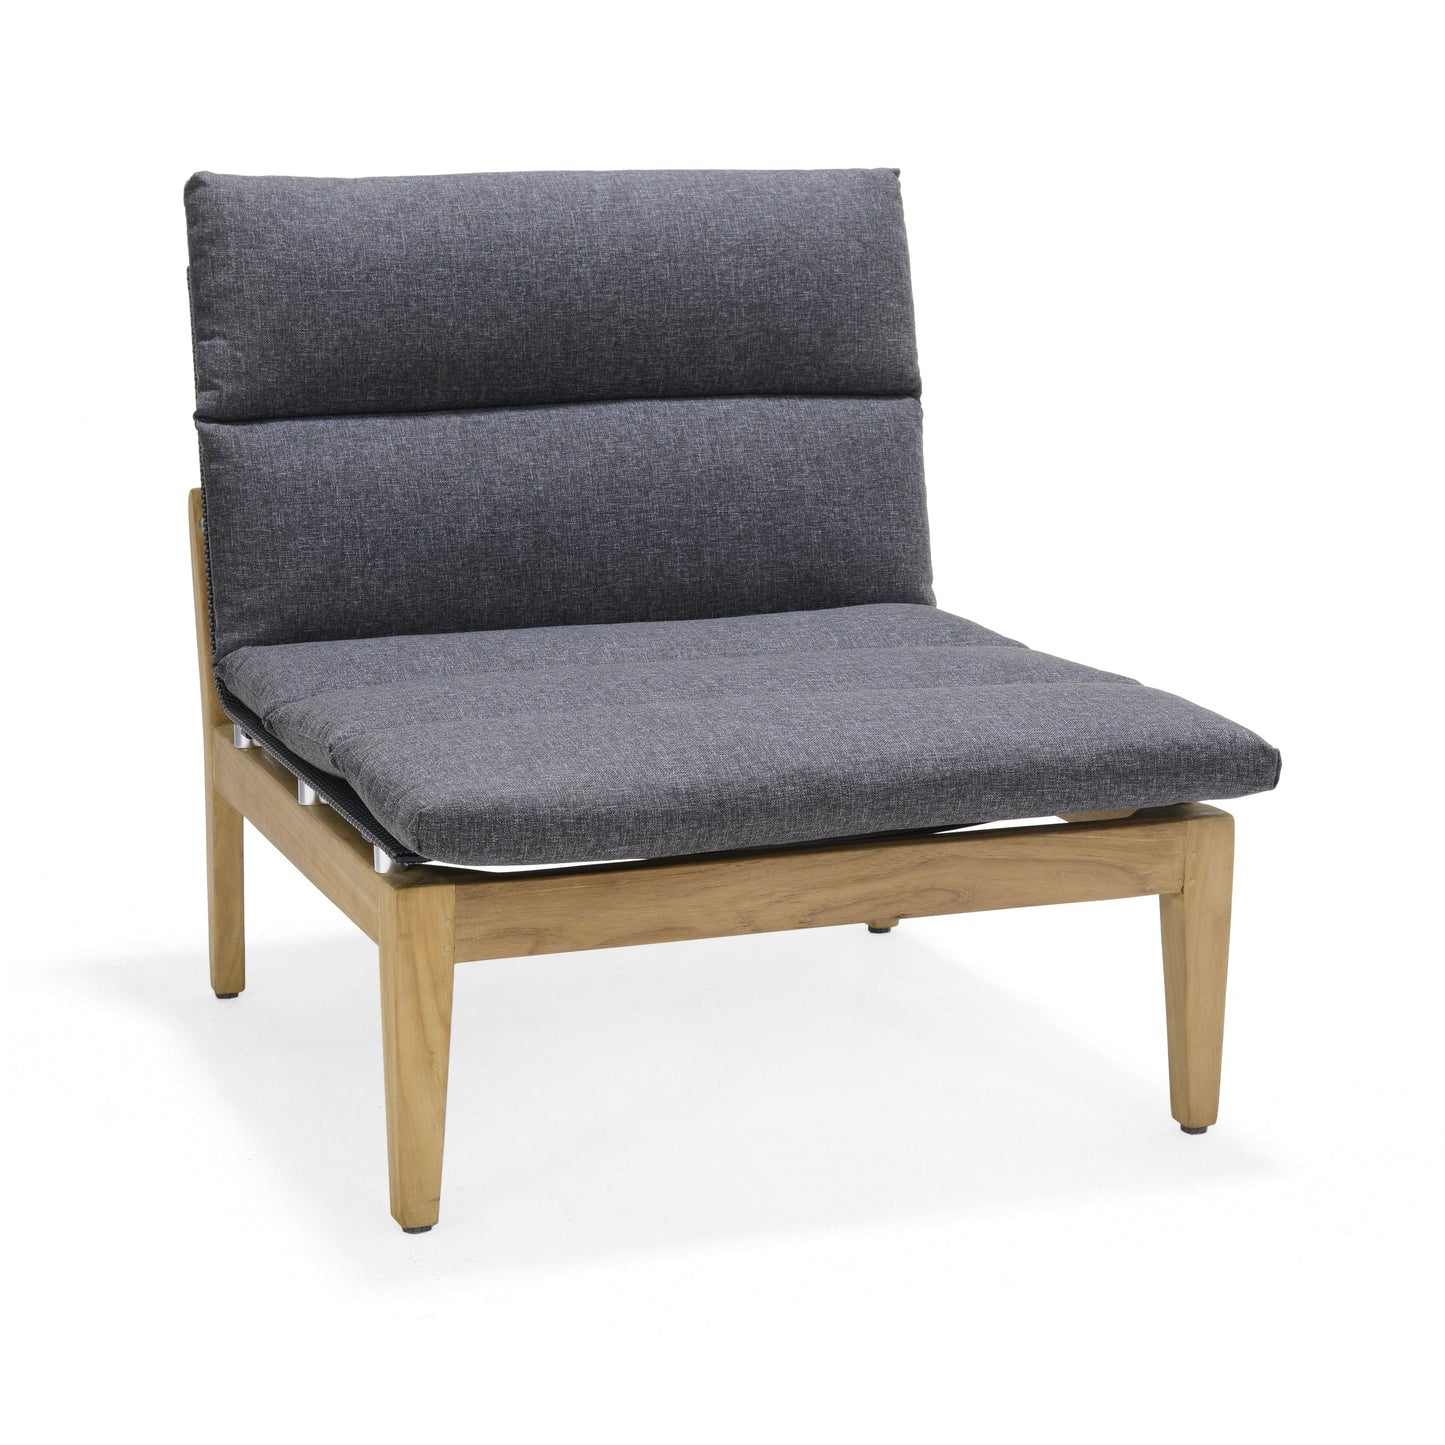 Arno Aluminum & Teak 100% FSC Certified Solid Wood White Side Sofa